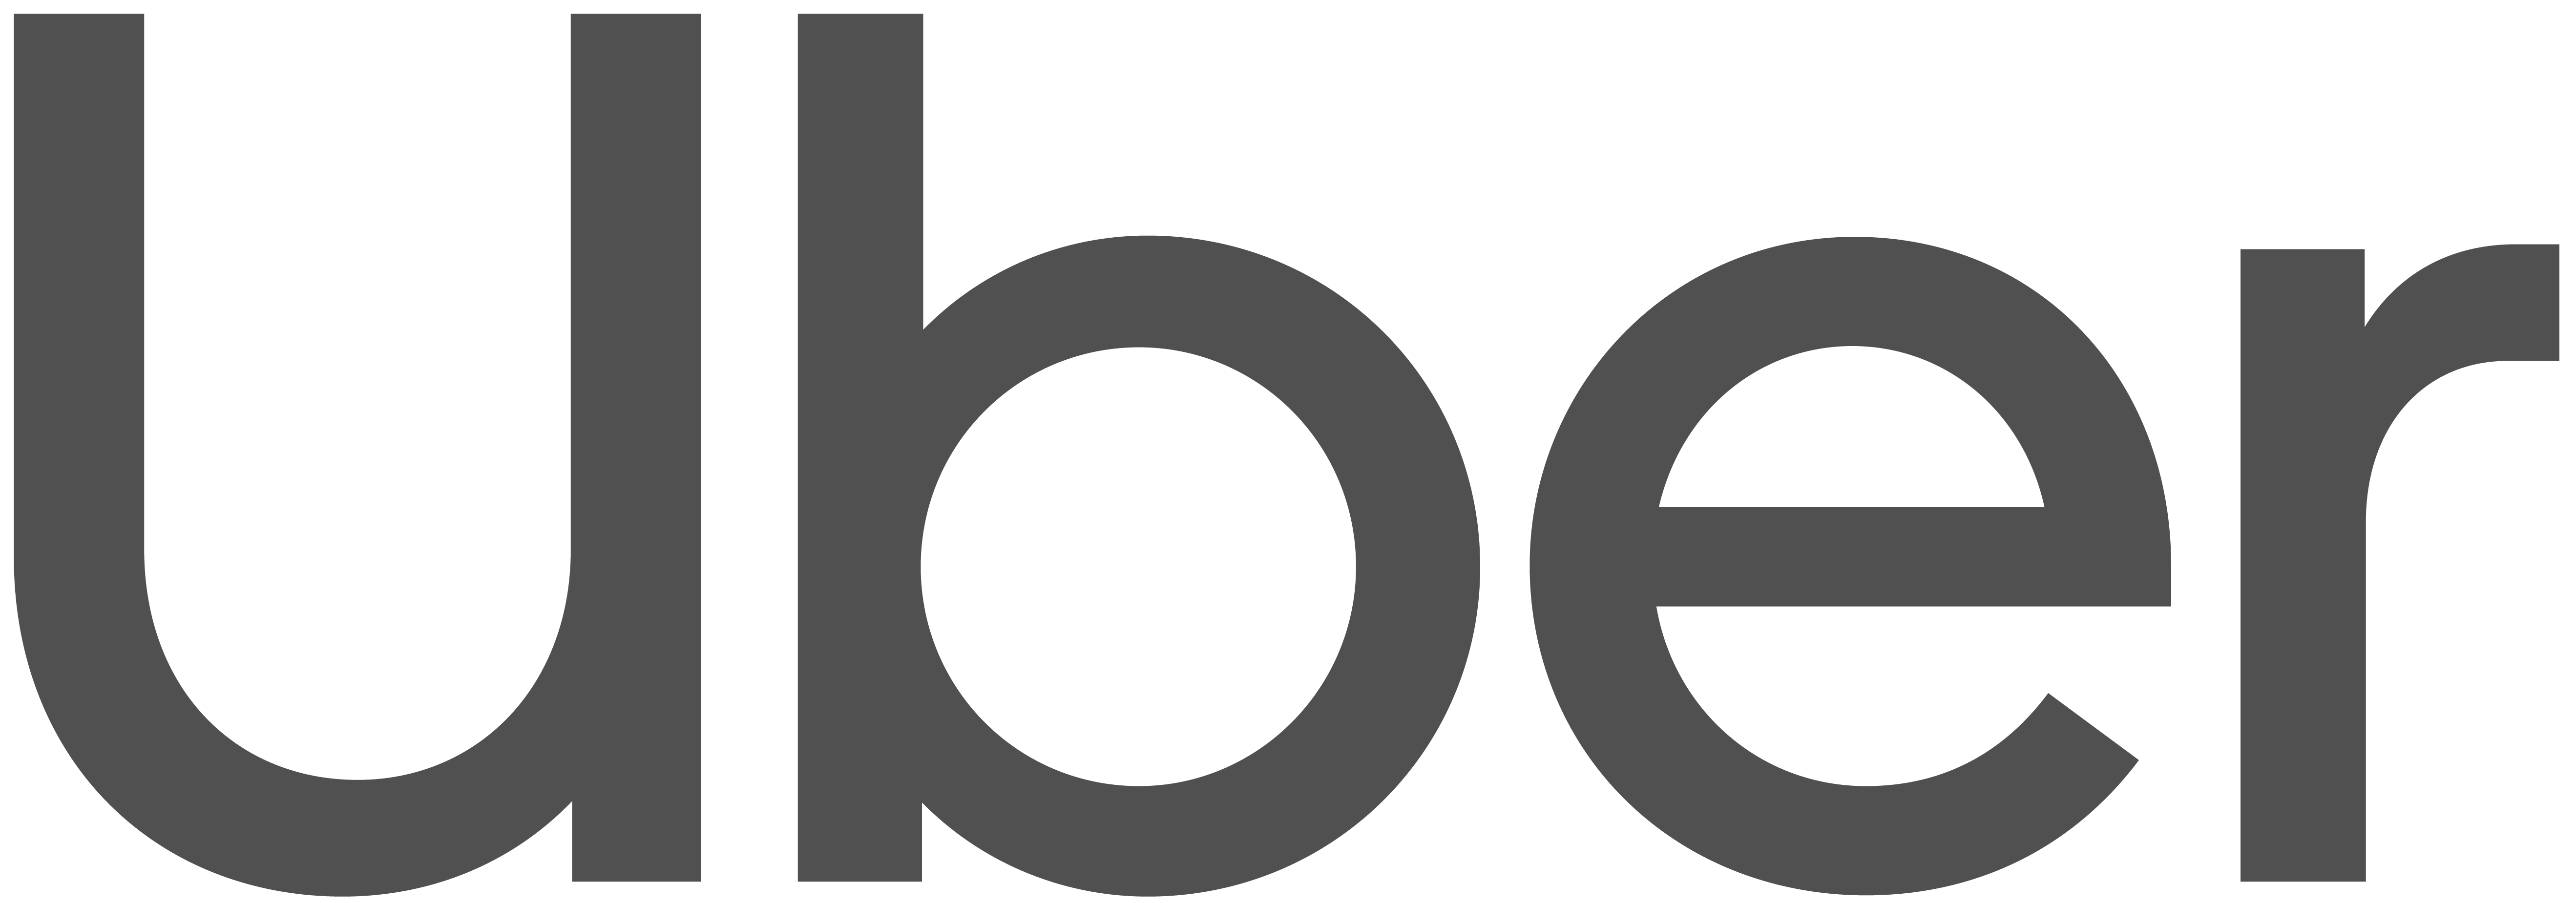 Logotipo da Uber